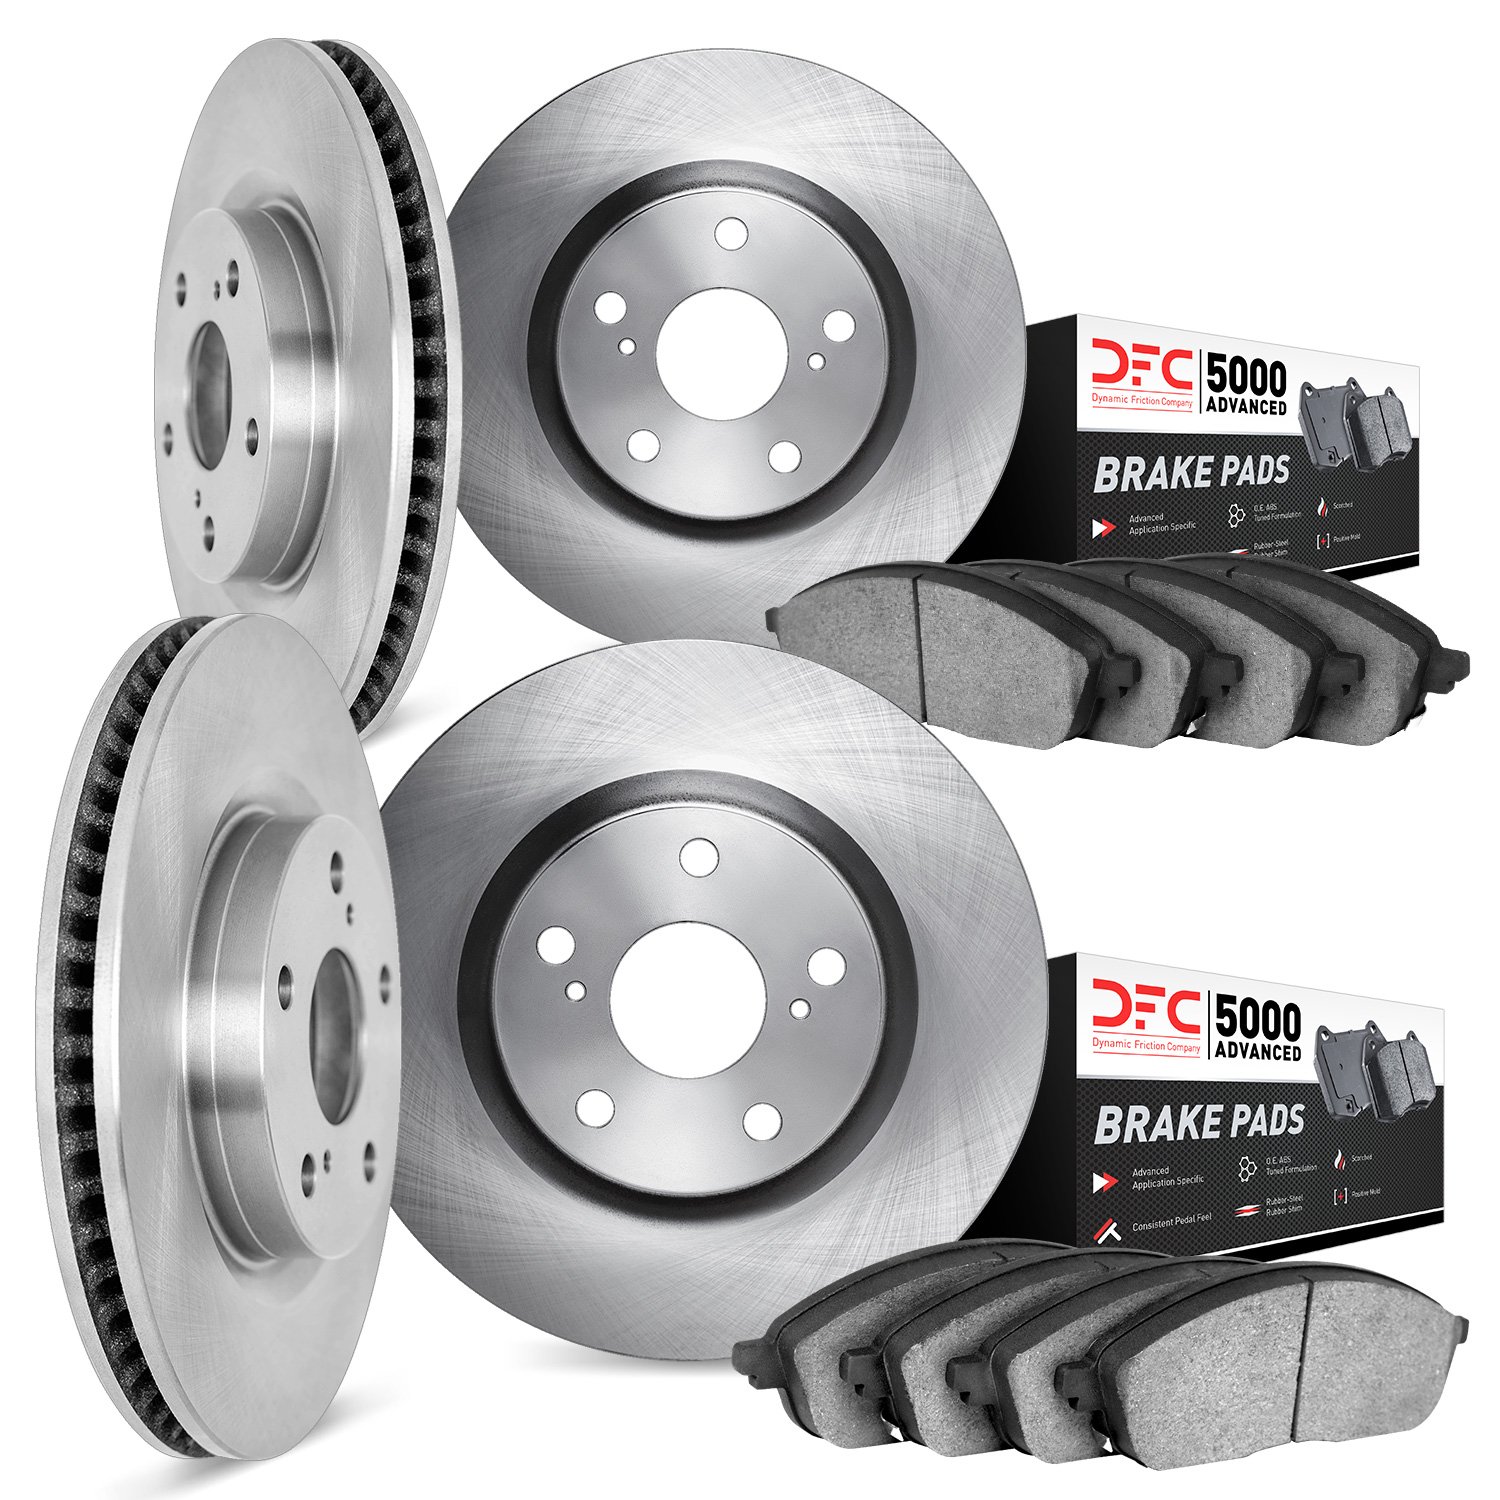 6504-13013 Brake Rotors w/5000 Advanced Brake Pads Kit, Fits Select Subaru, Position: Front and Rear